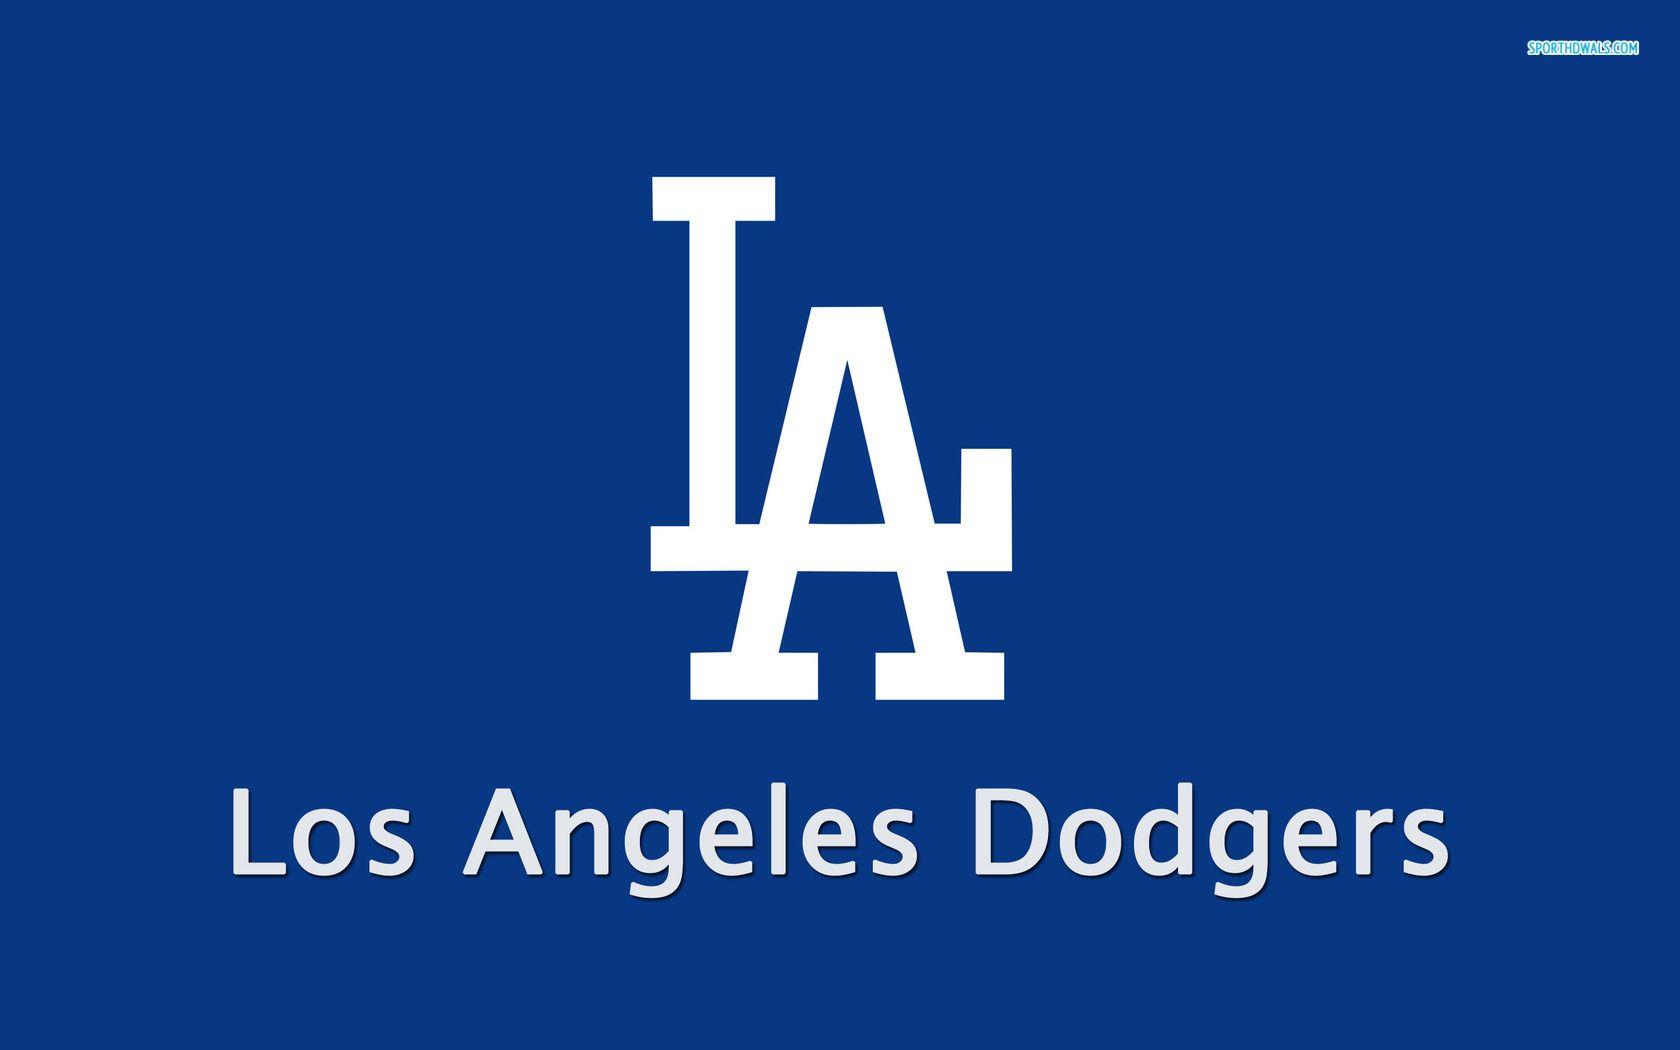 Los Angeles Dodgers desktop wallpaper. Los Angeles Dodgers